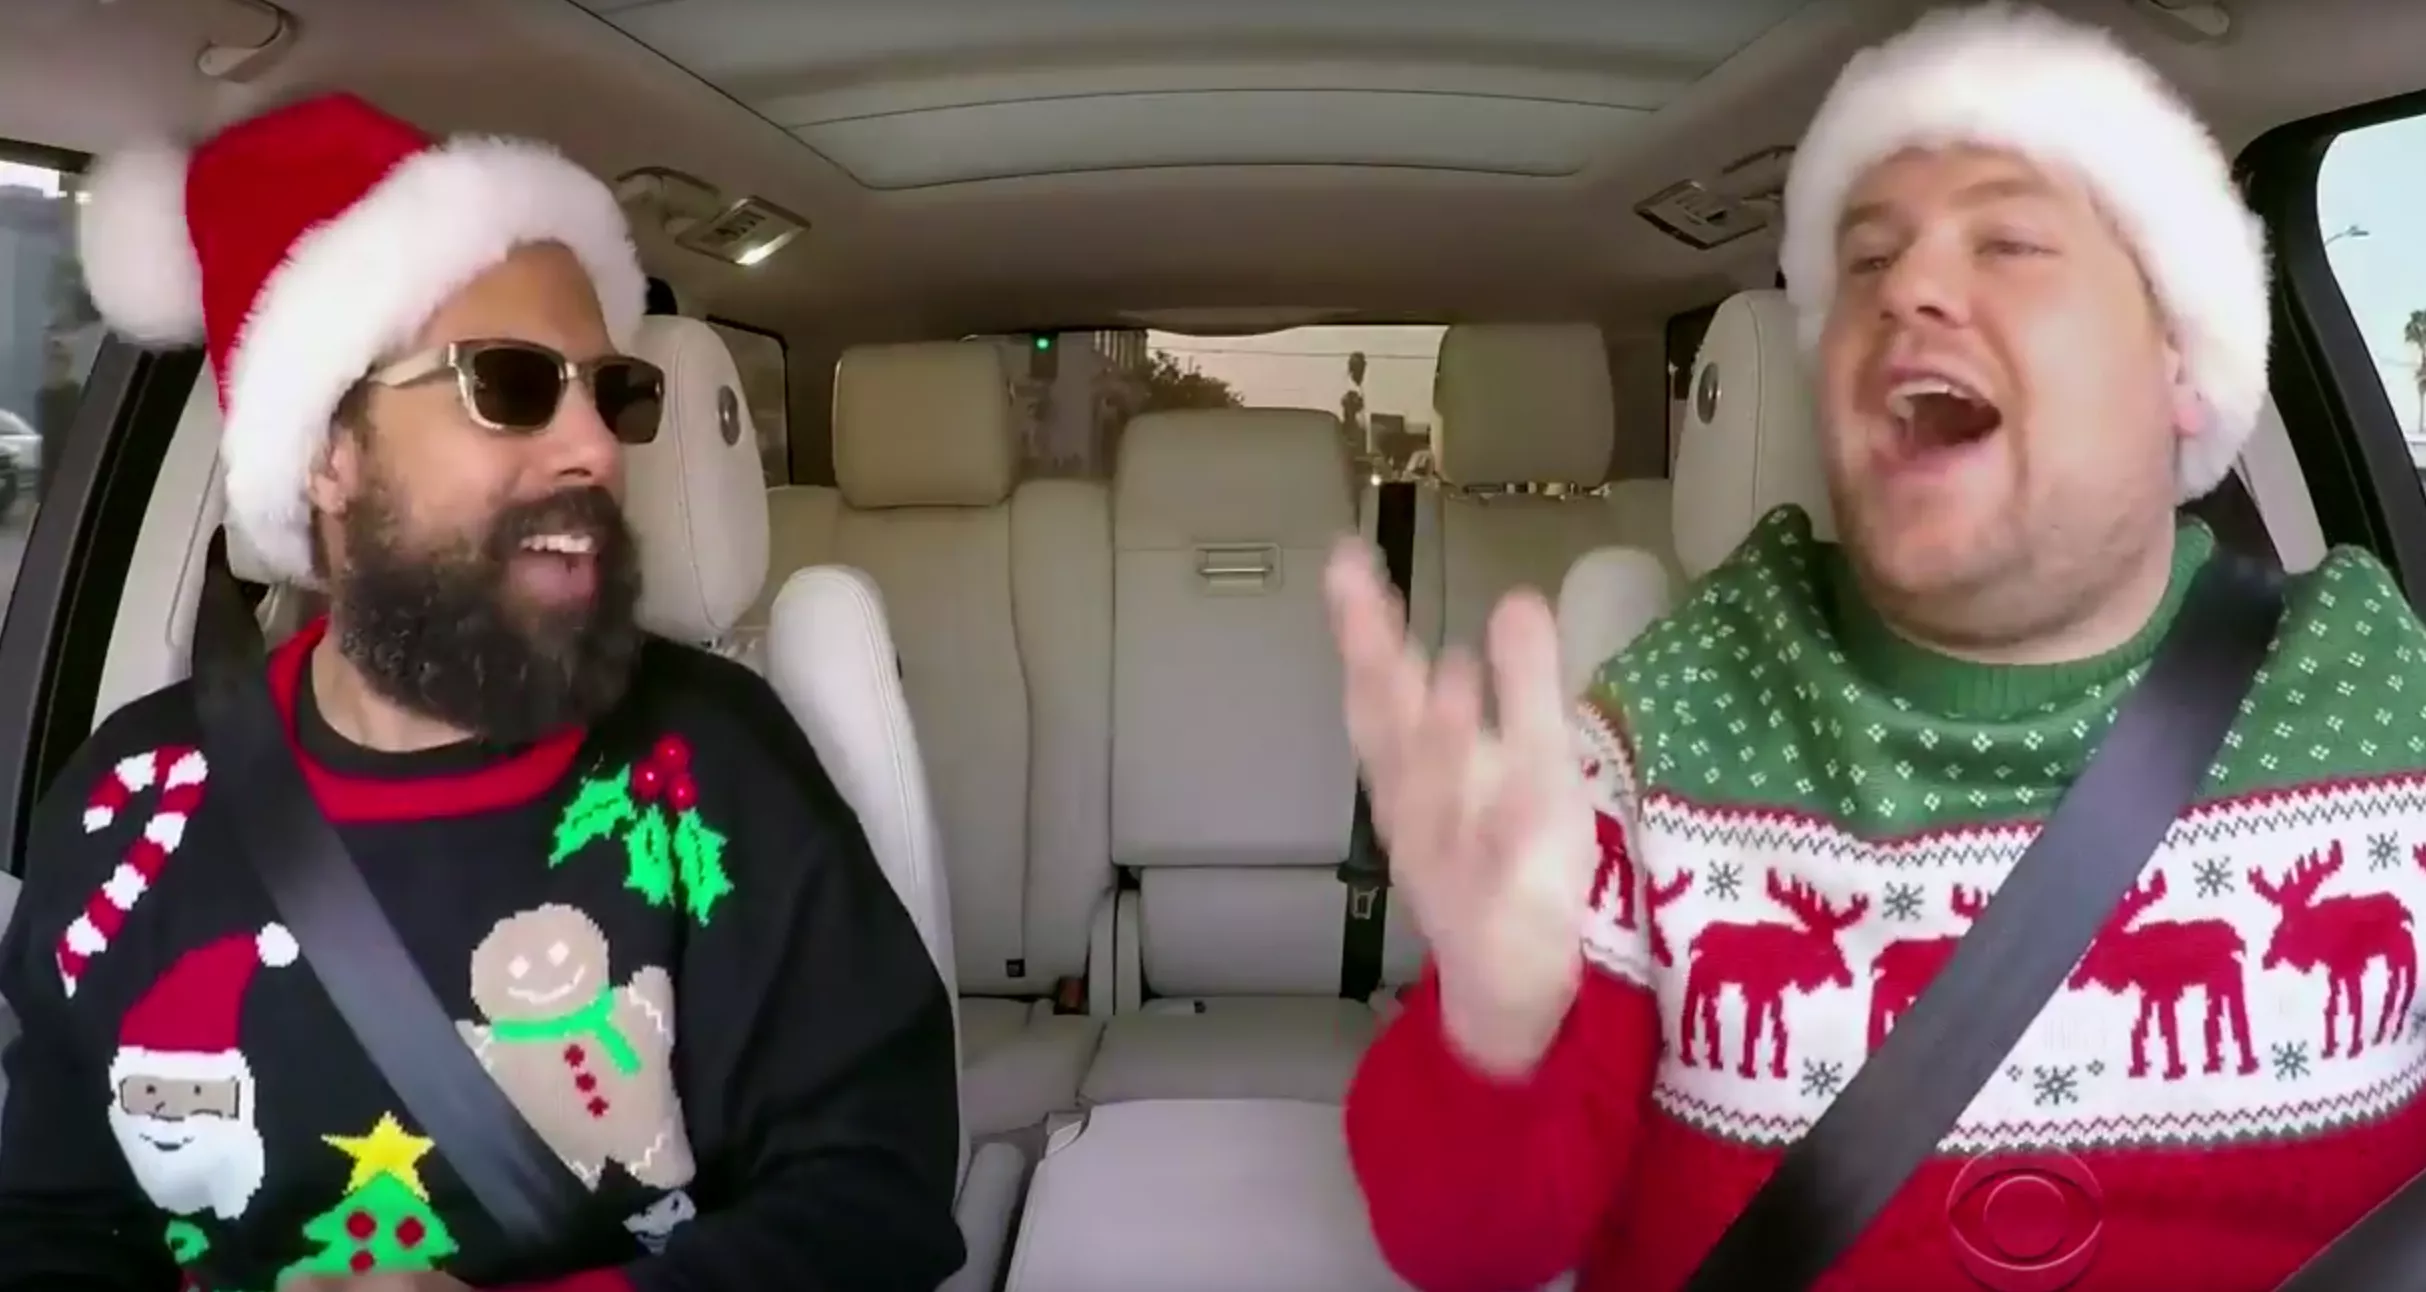 Carpool Karaoke: Årets gæster synger julen ind med "Santa Claus is Coming to Town"